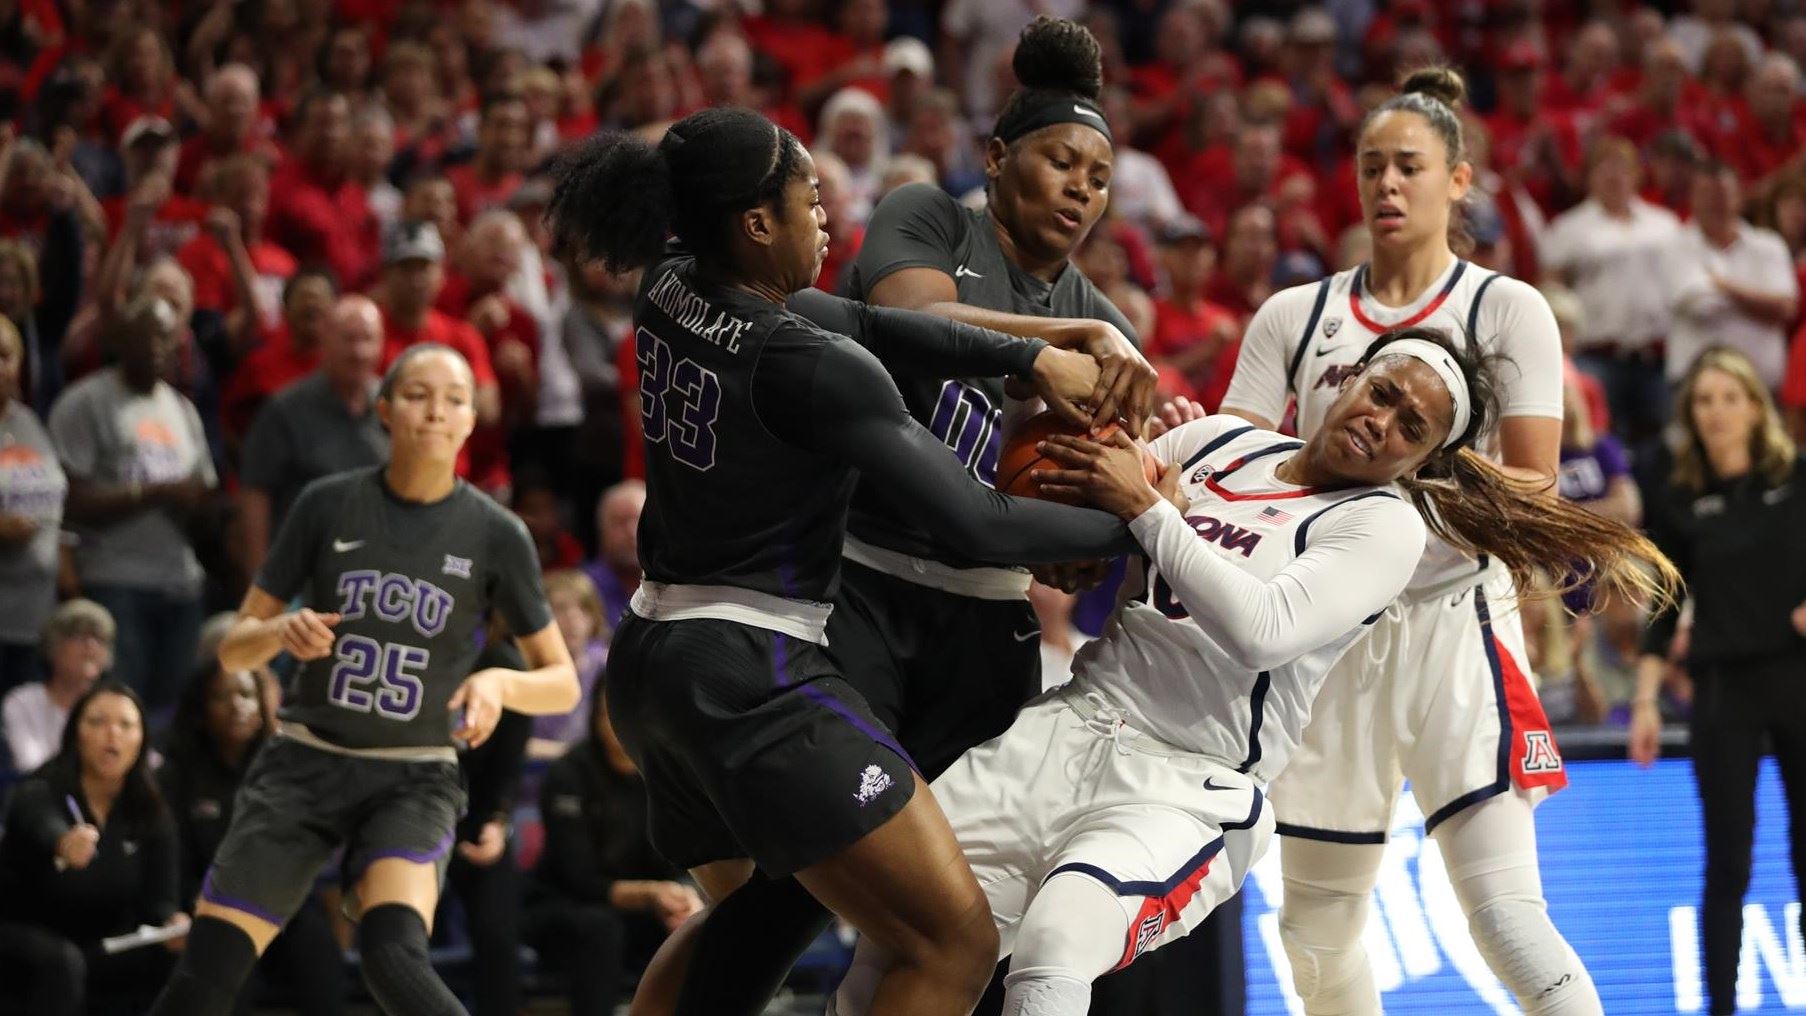 Women's basketball see season end in 5953 loss to Arizona in WNIT